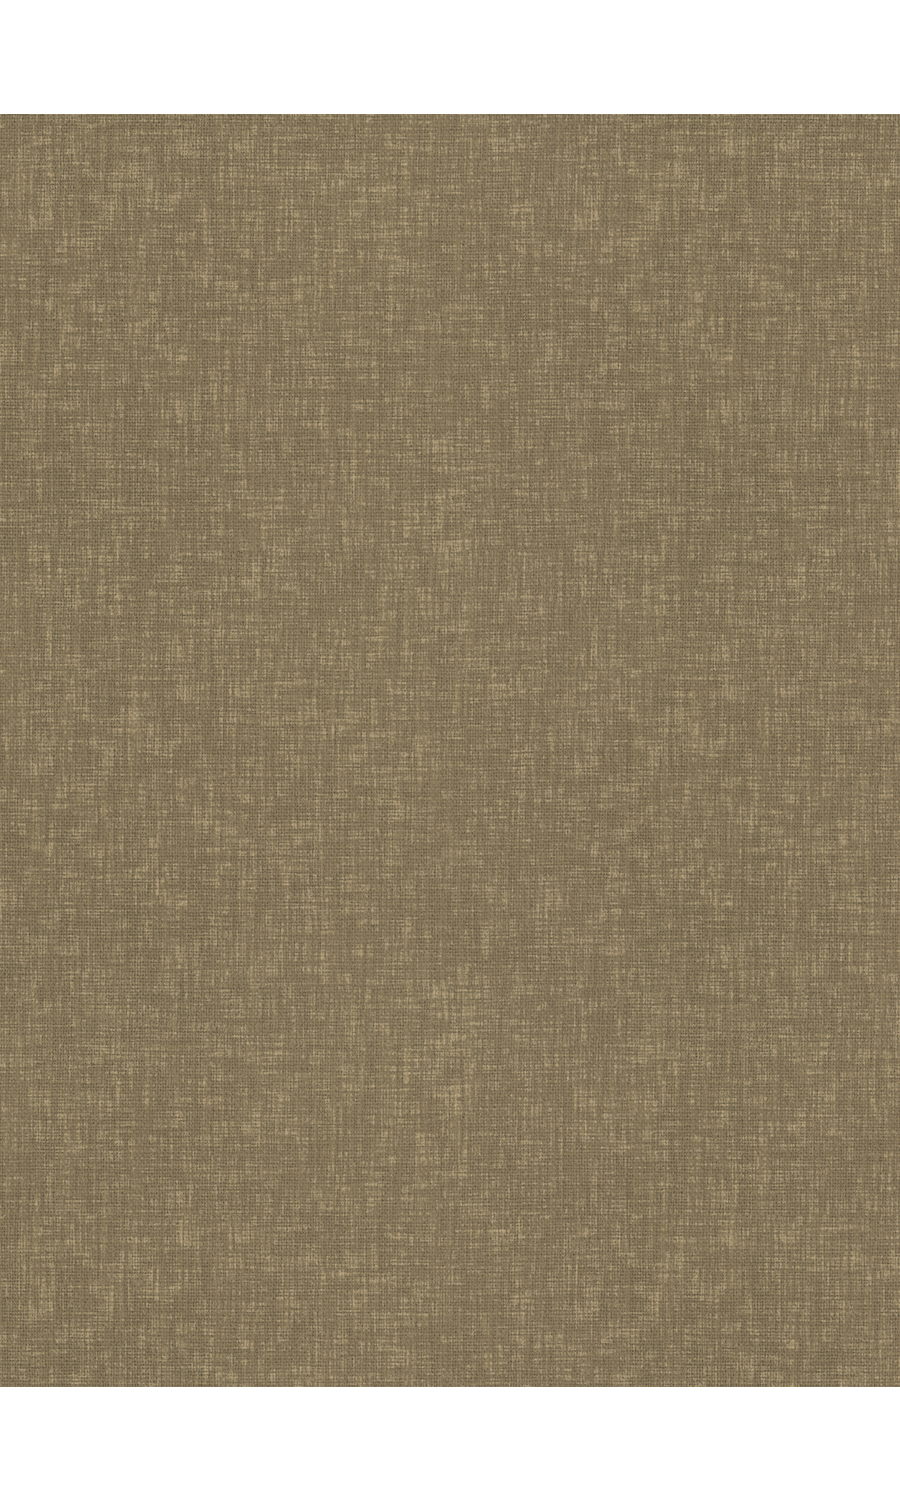 'Kinta Valley' Textured Custom Curtains (Khaki Brown)